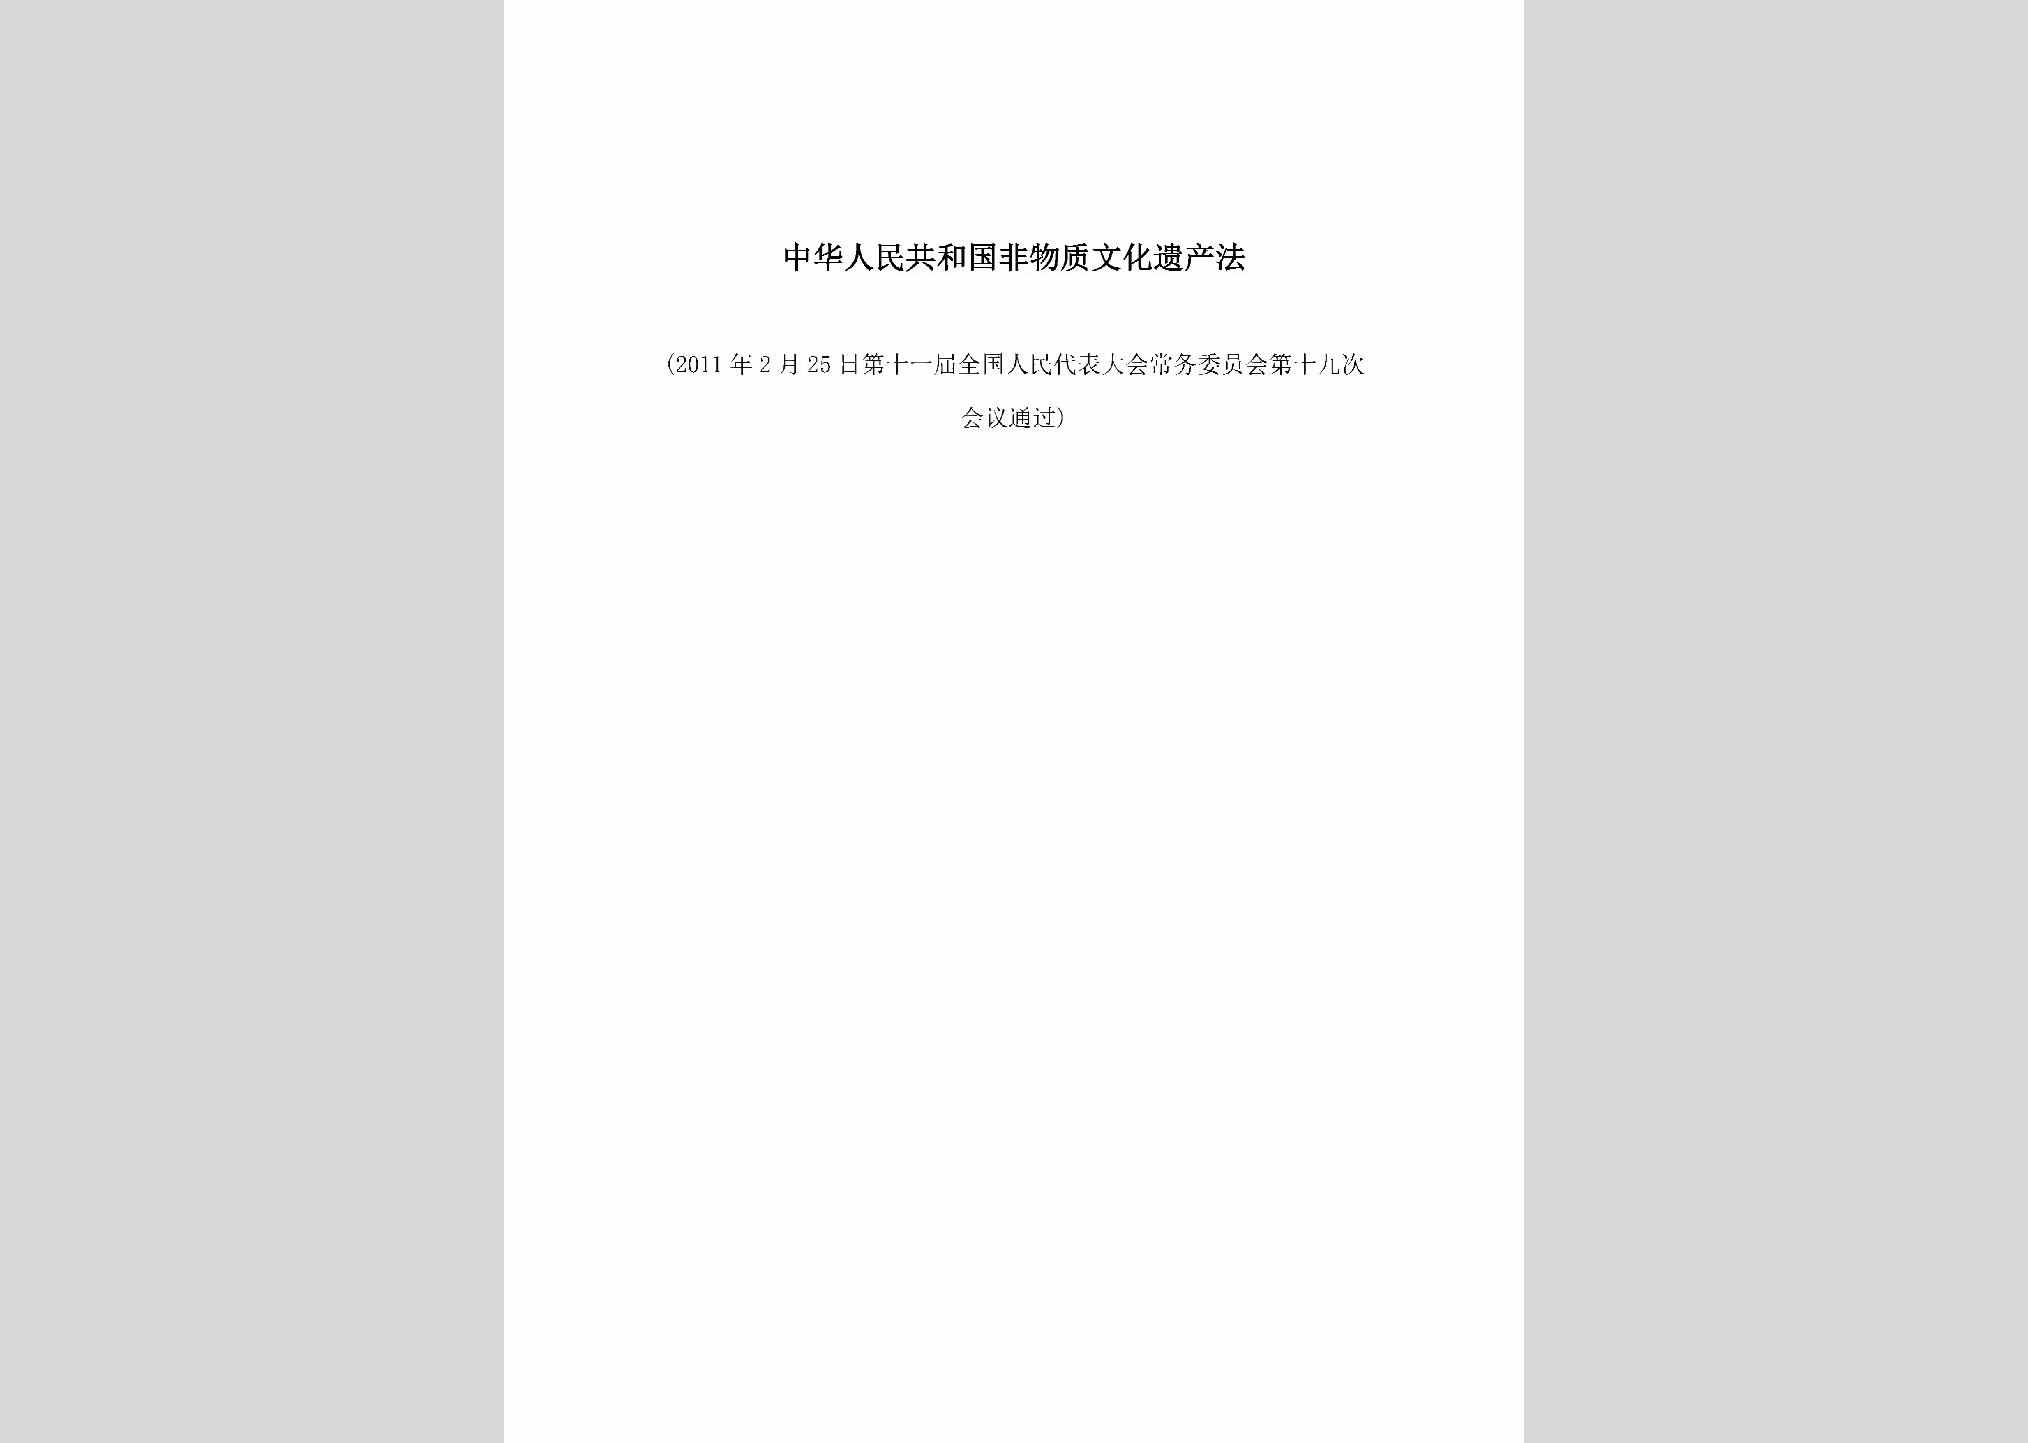 FWZWHYCF：中华人民共和国非物质文化遗产法